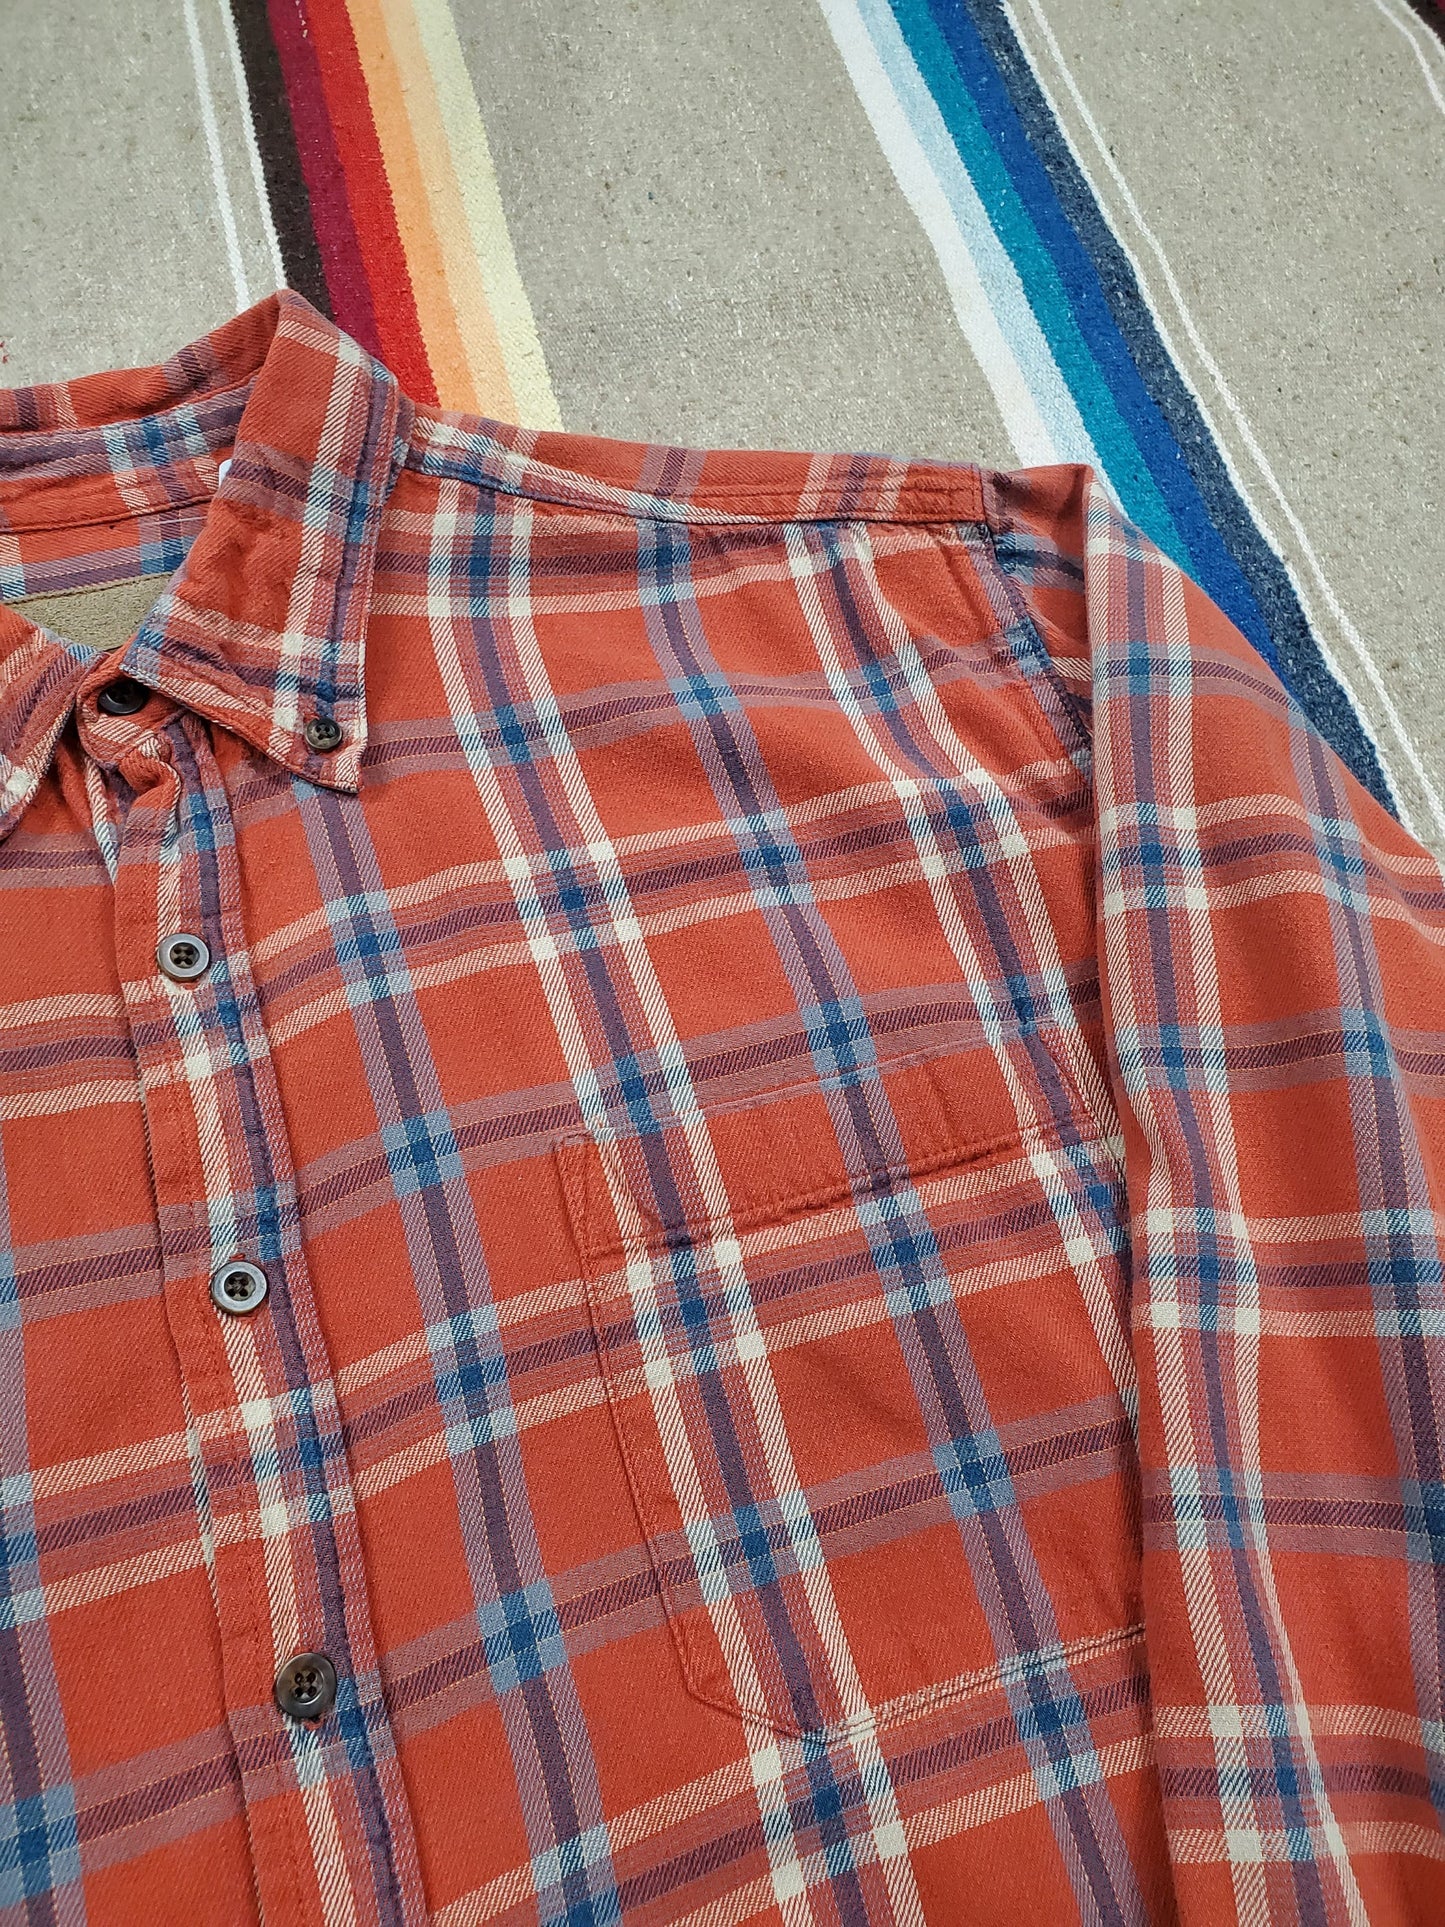 2000s Faded Orange Plaid Button Down Flannel Shirt Size L/XL